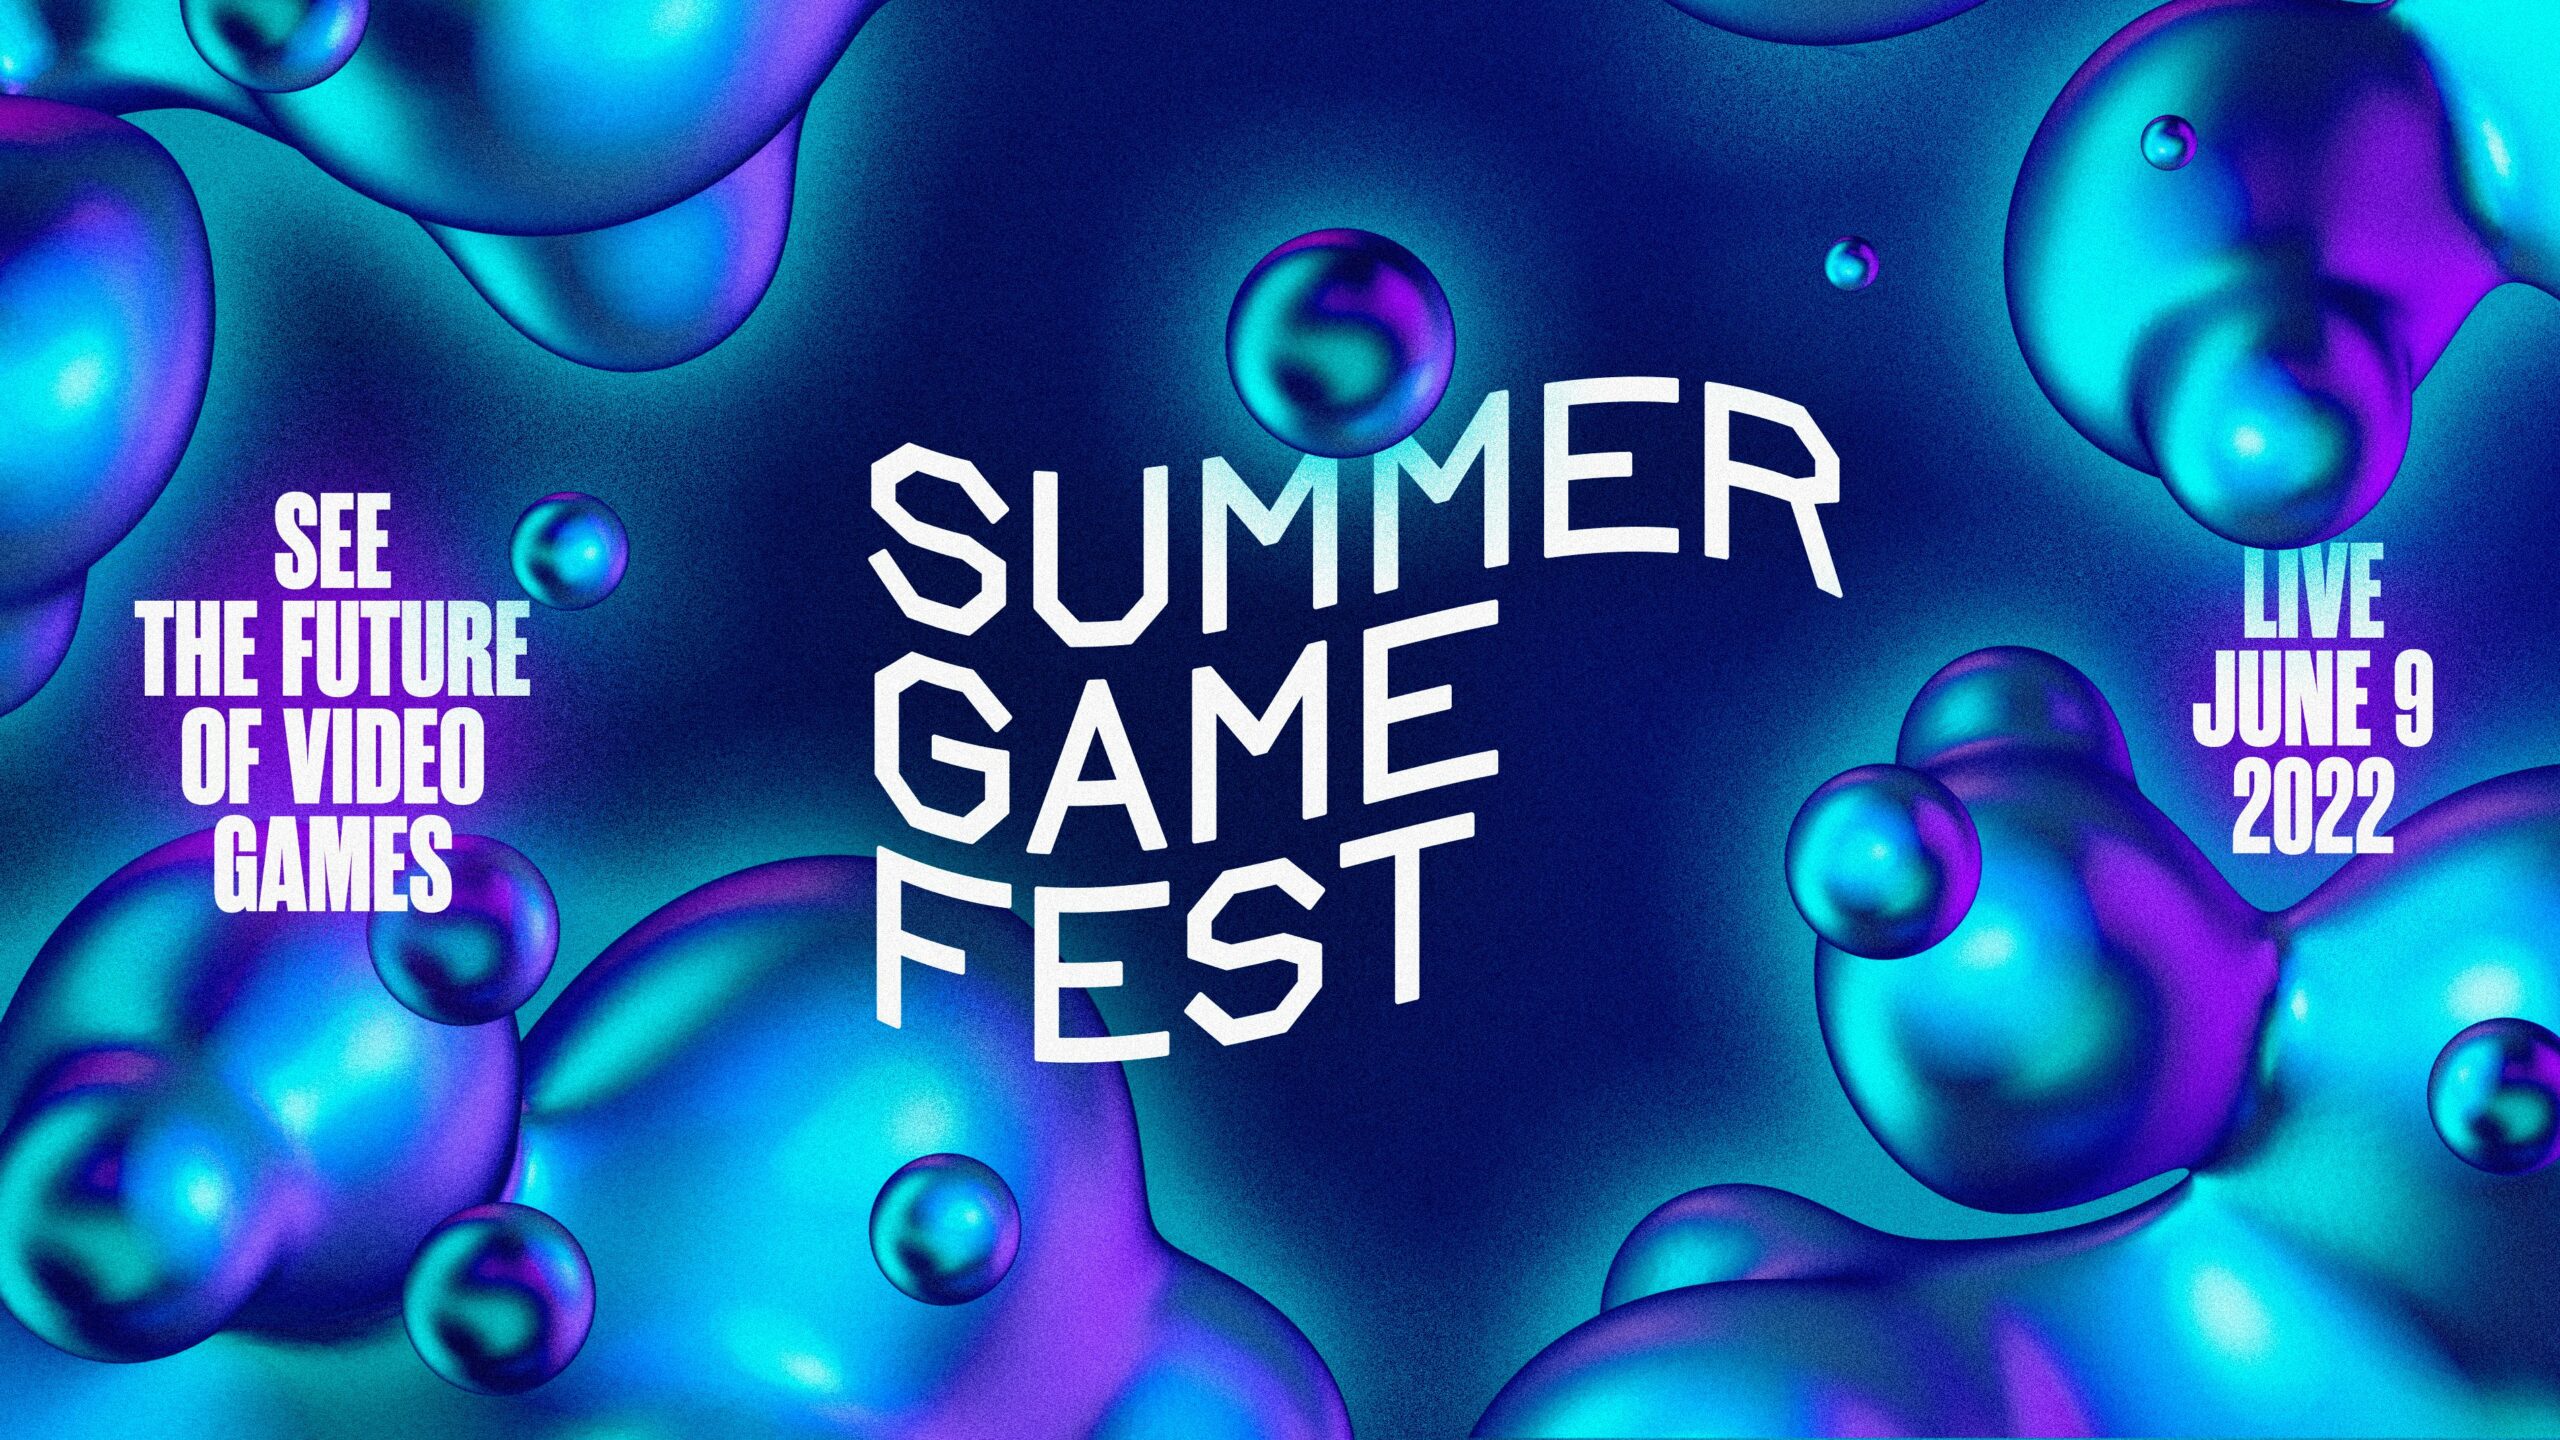 #Summer Game Fest 2022: Die große Show steigt am 9. Juni